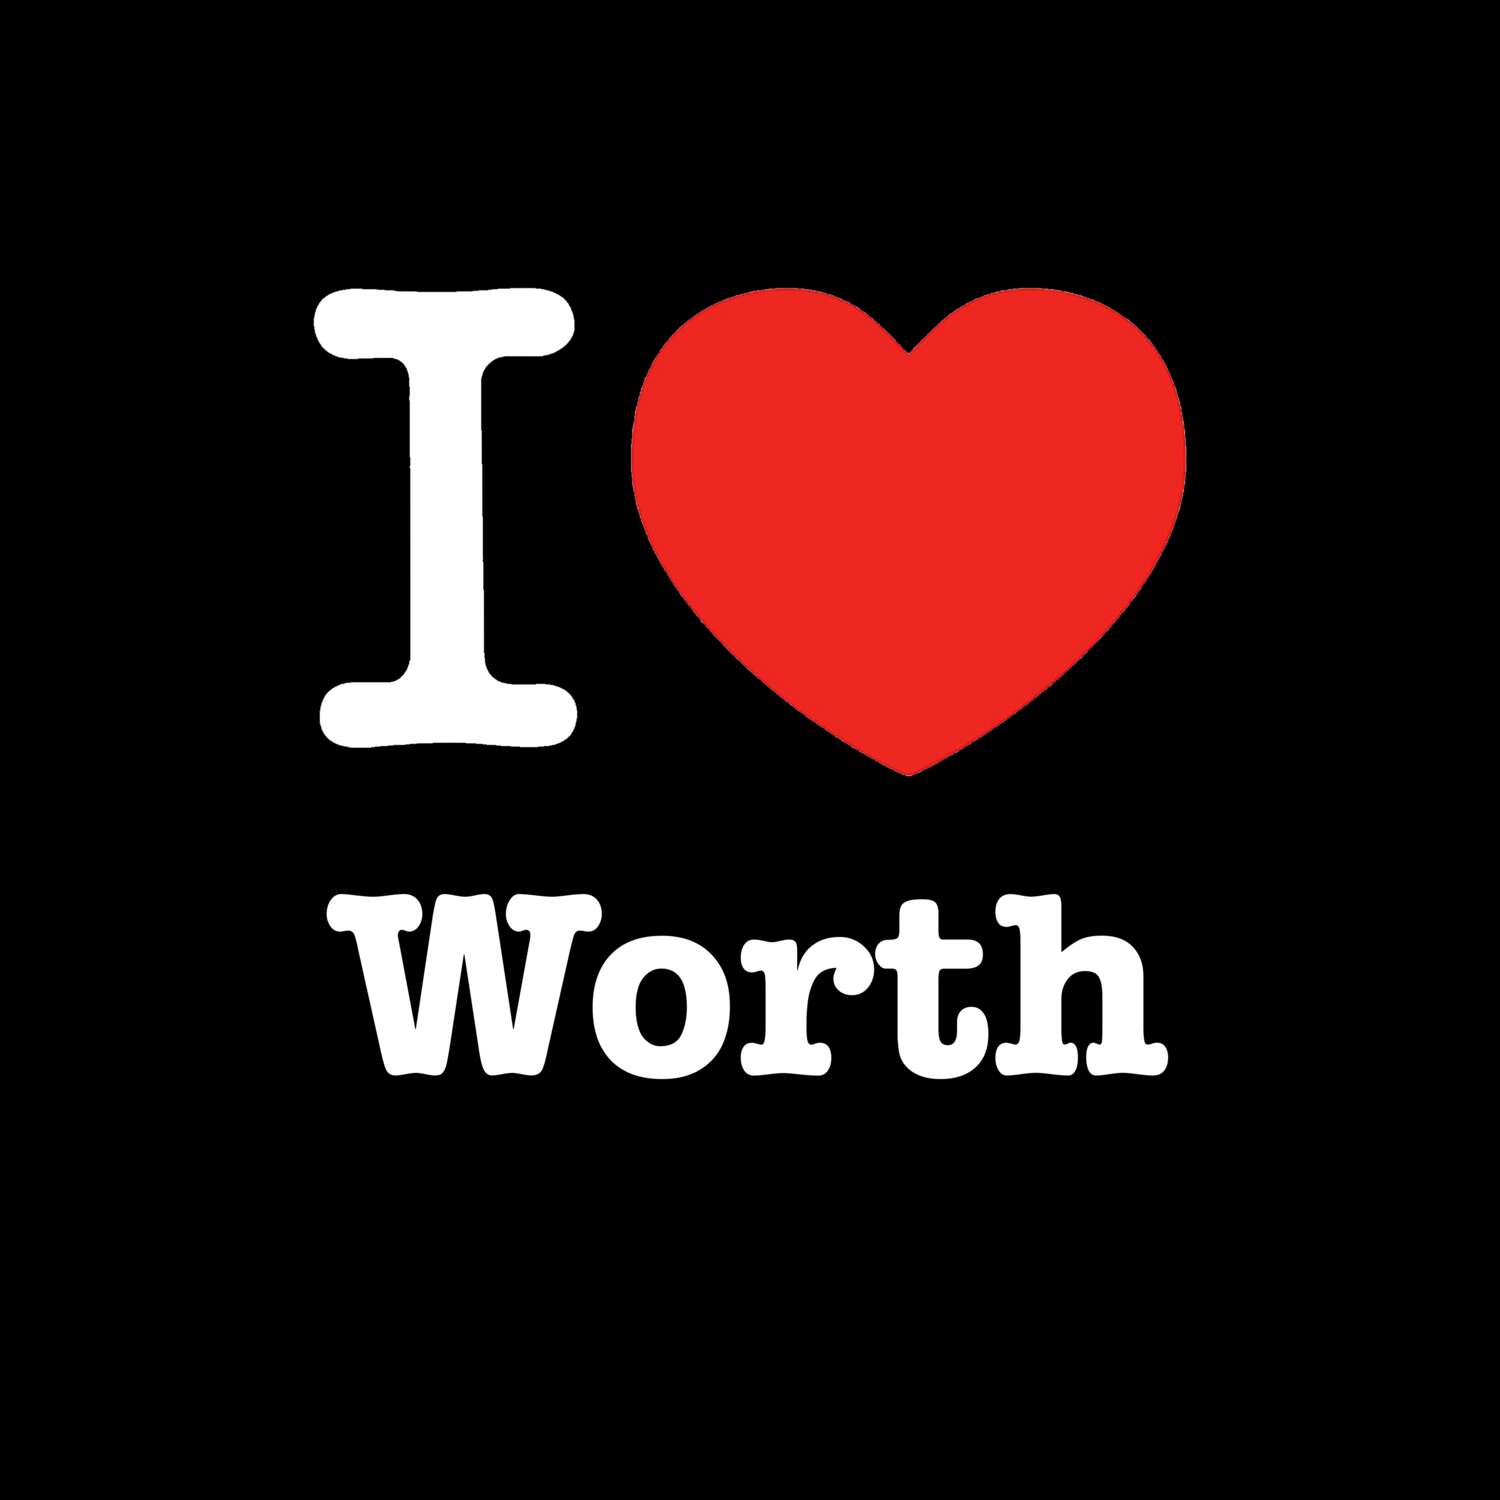 Worth T-Shirt »I love«